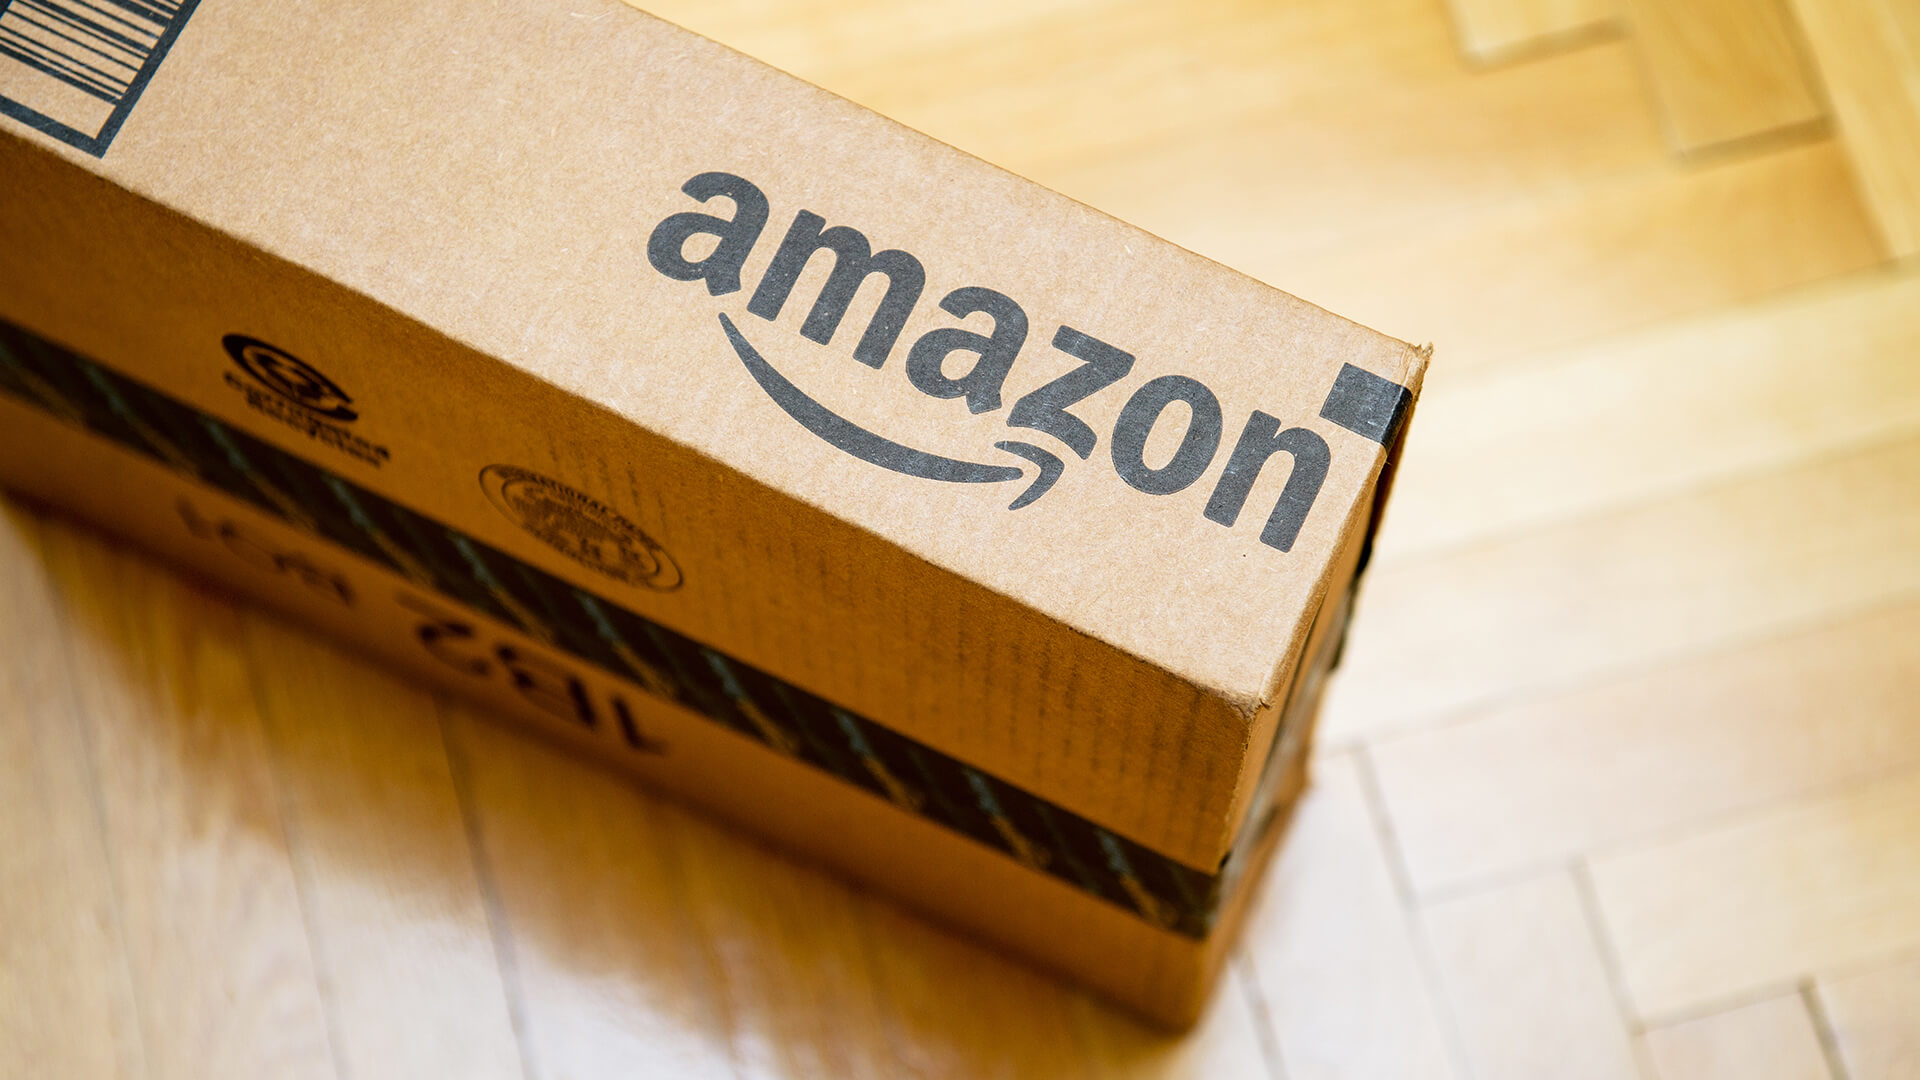 Amazon matches Walmart, drops free shipping minimum to $35